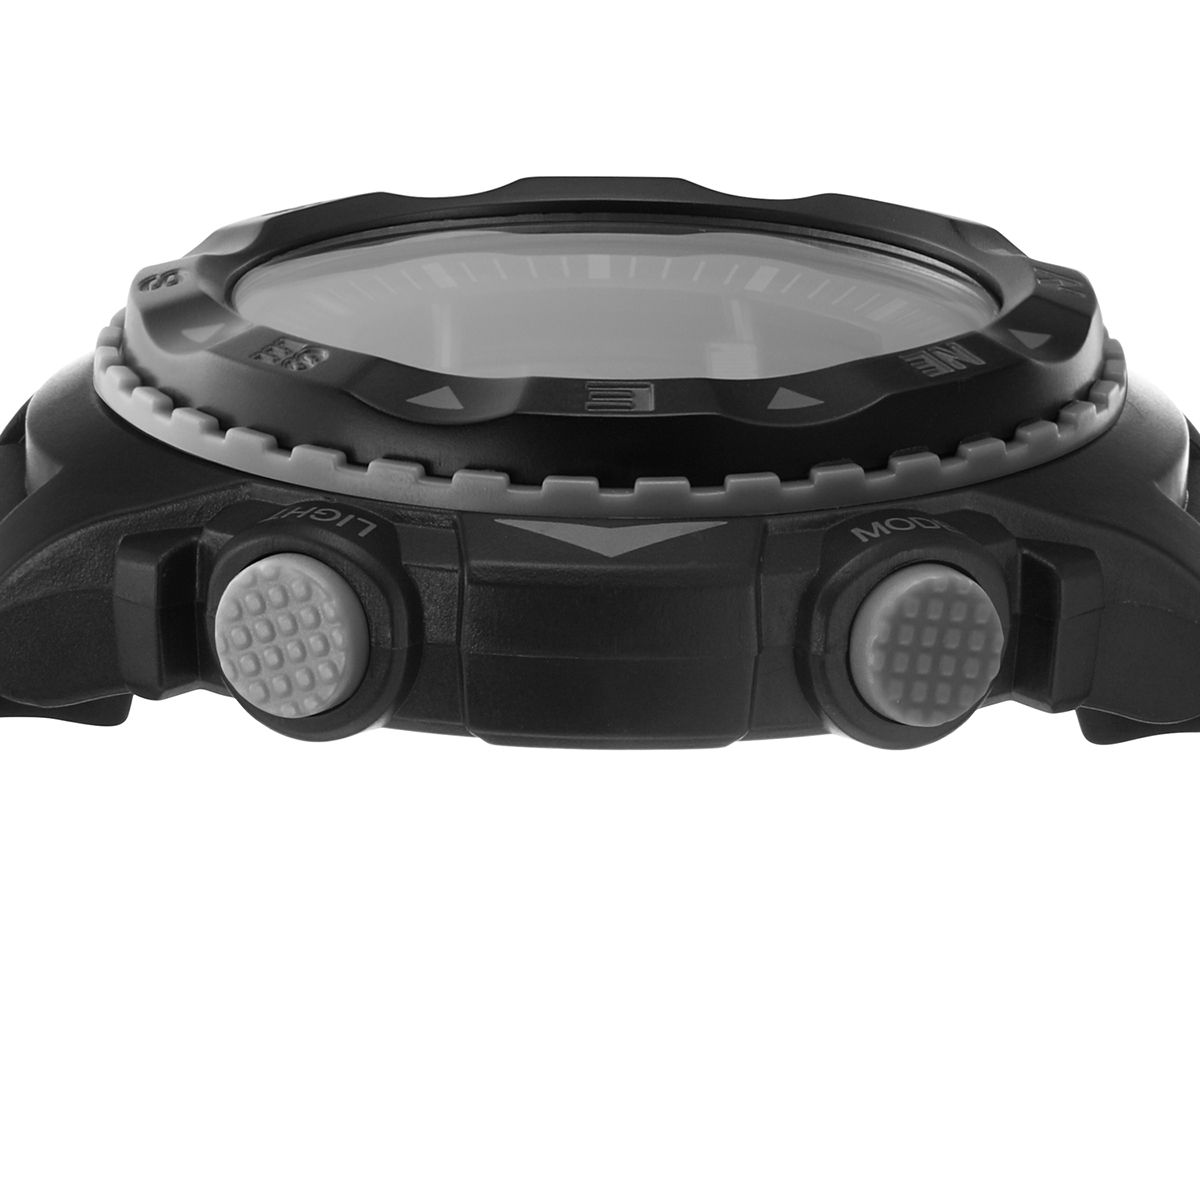 Puma 12 Black Watch P6054: Buy Puma 12 Black Watch P6054 Online at